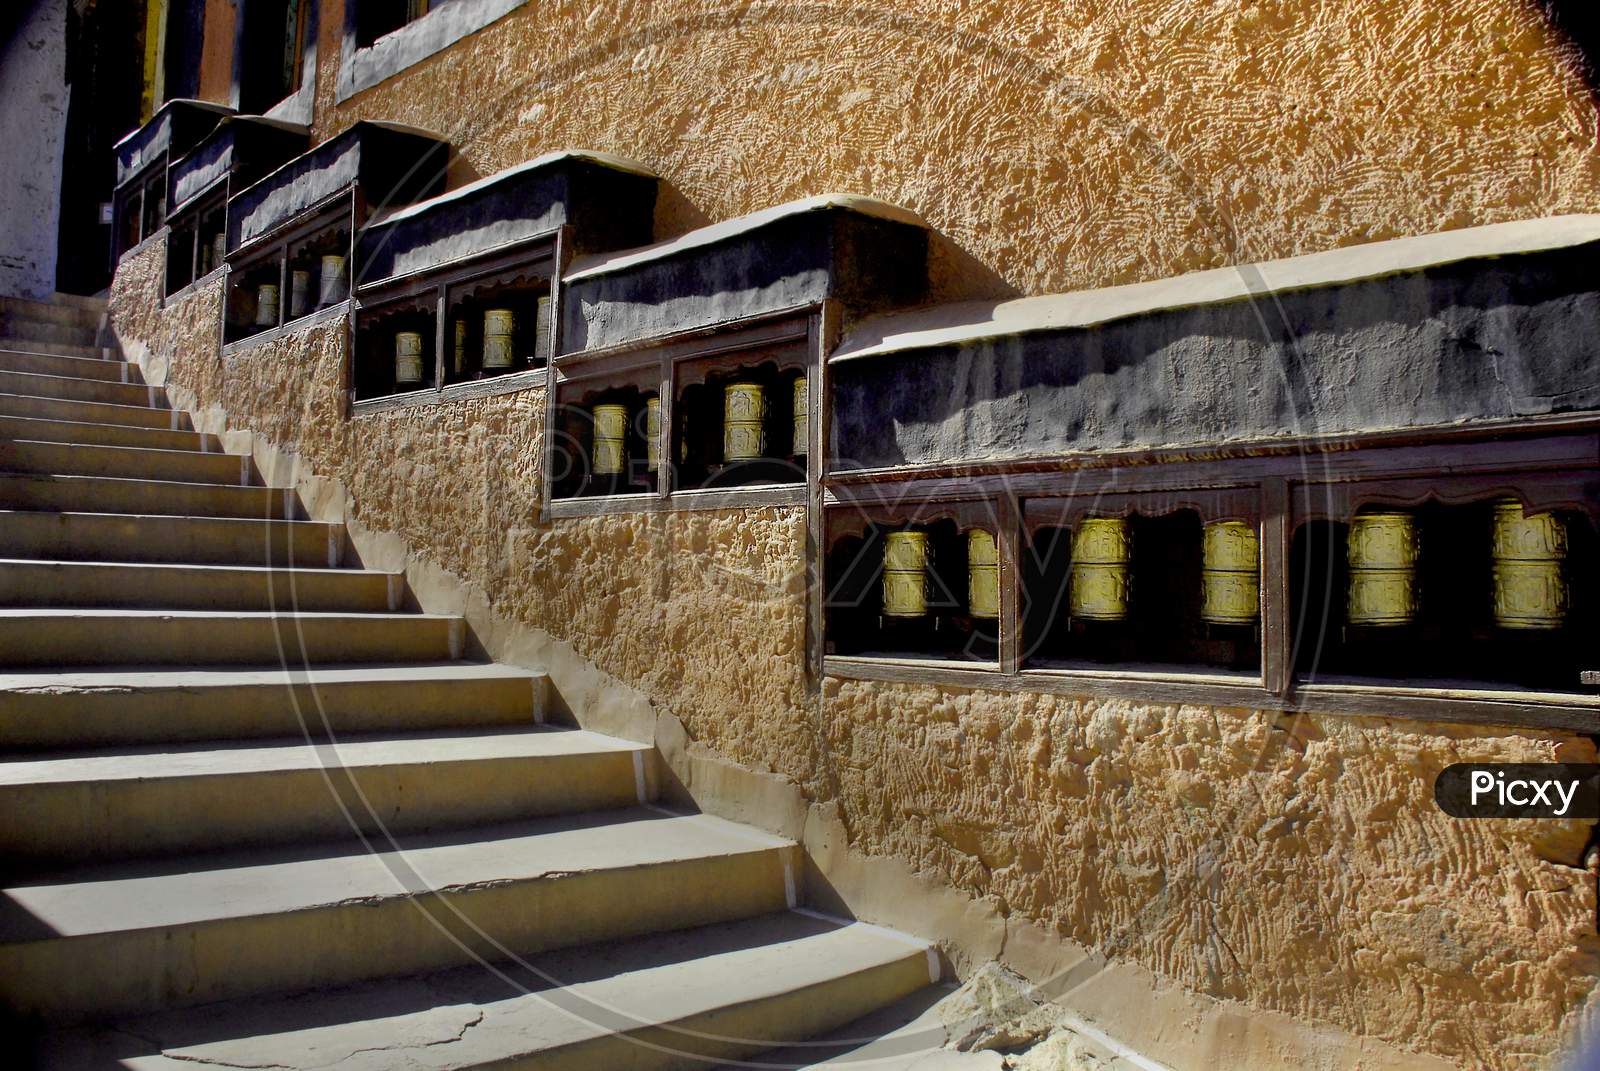 Architecture Of Buddhist monastery in Ladakh